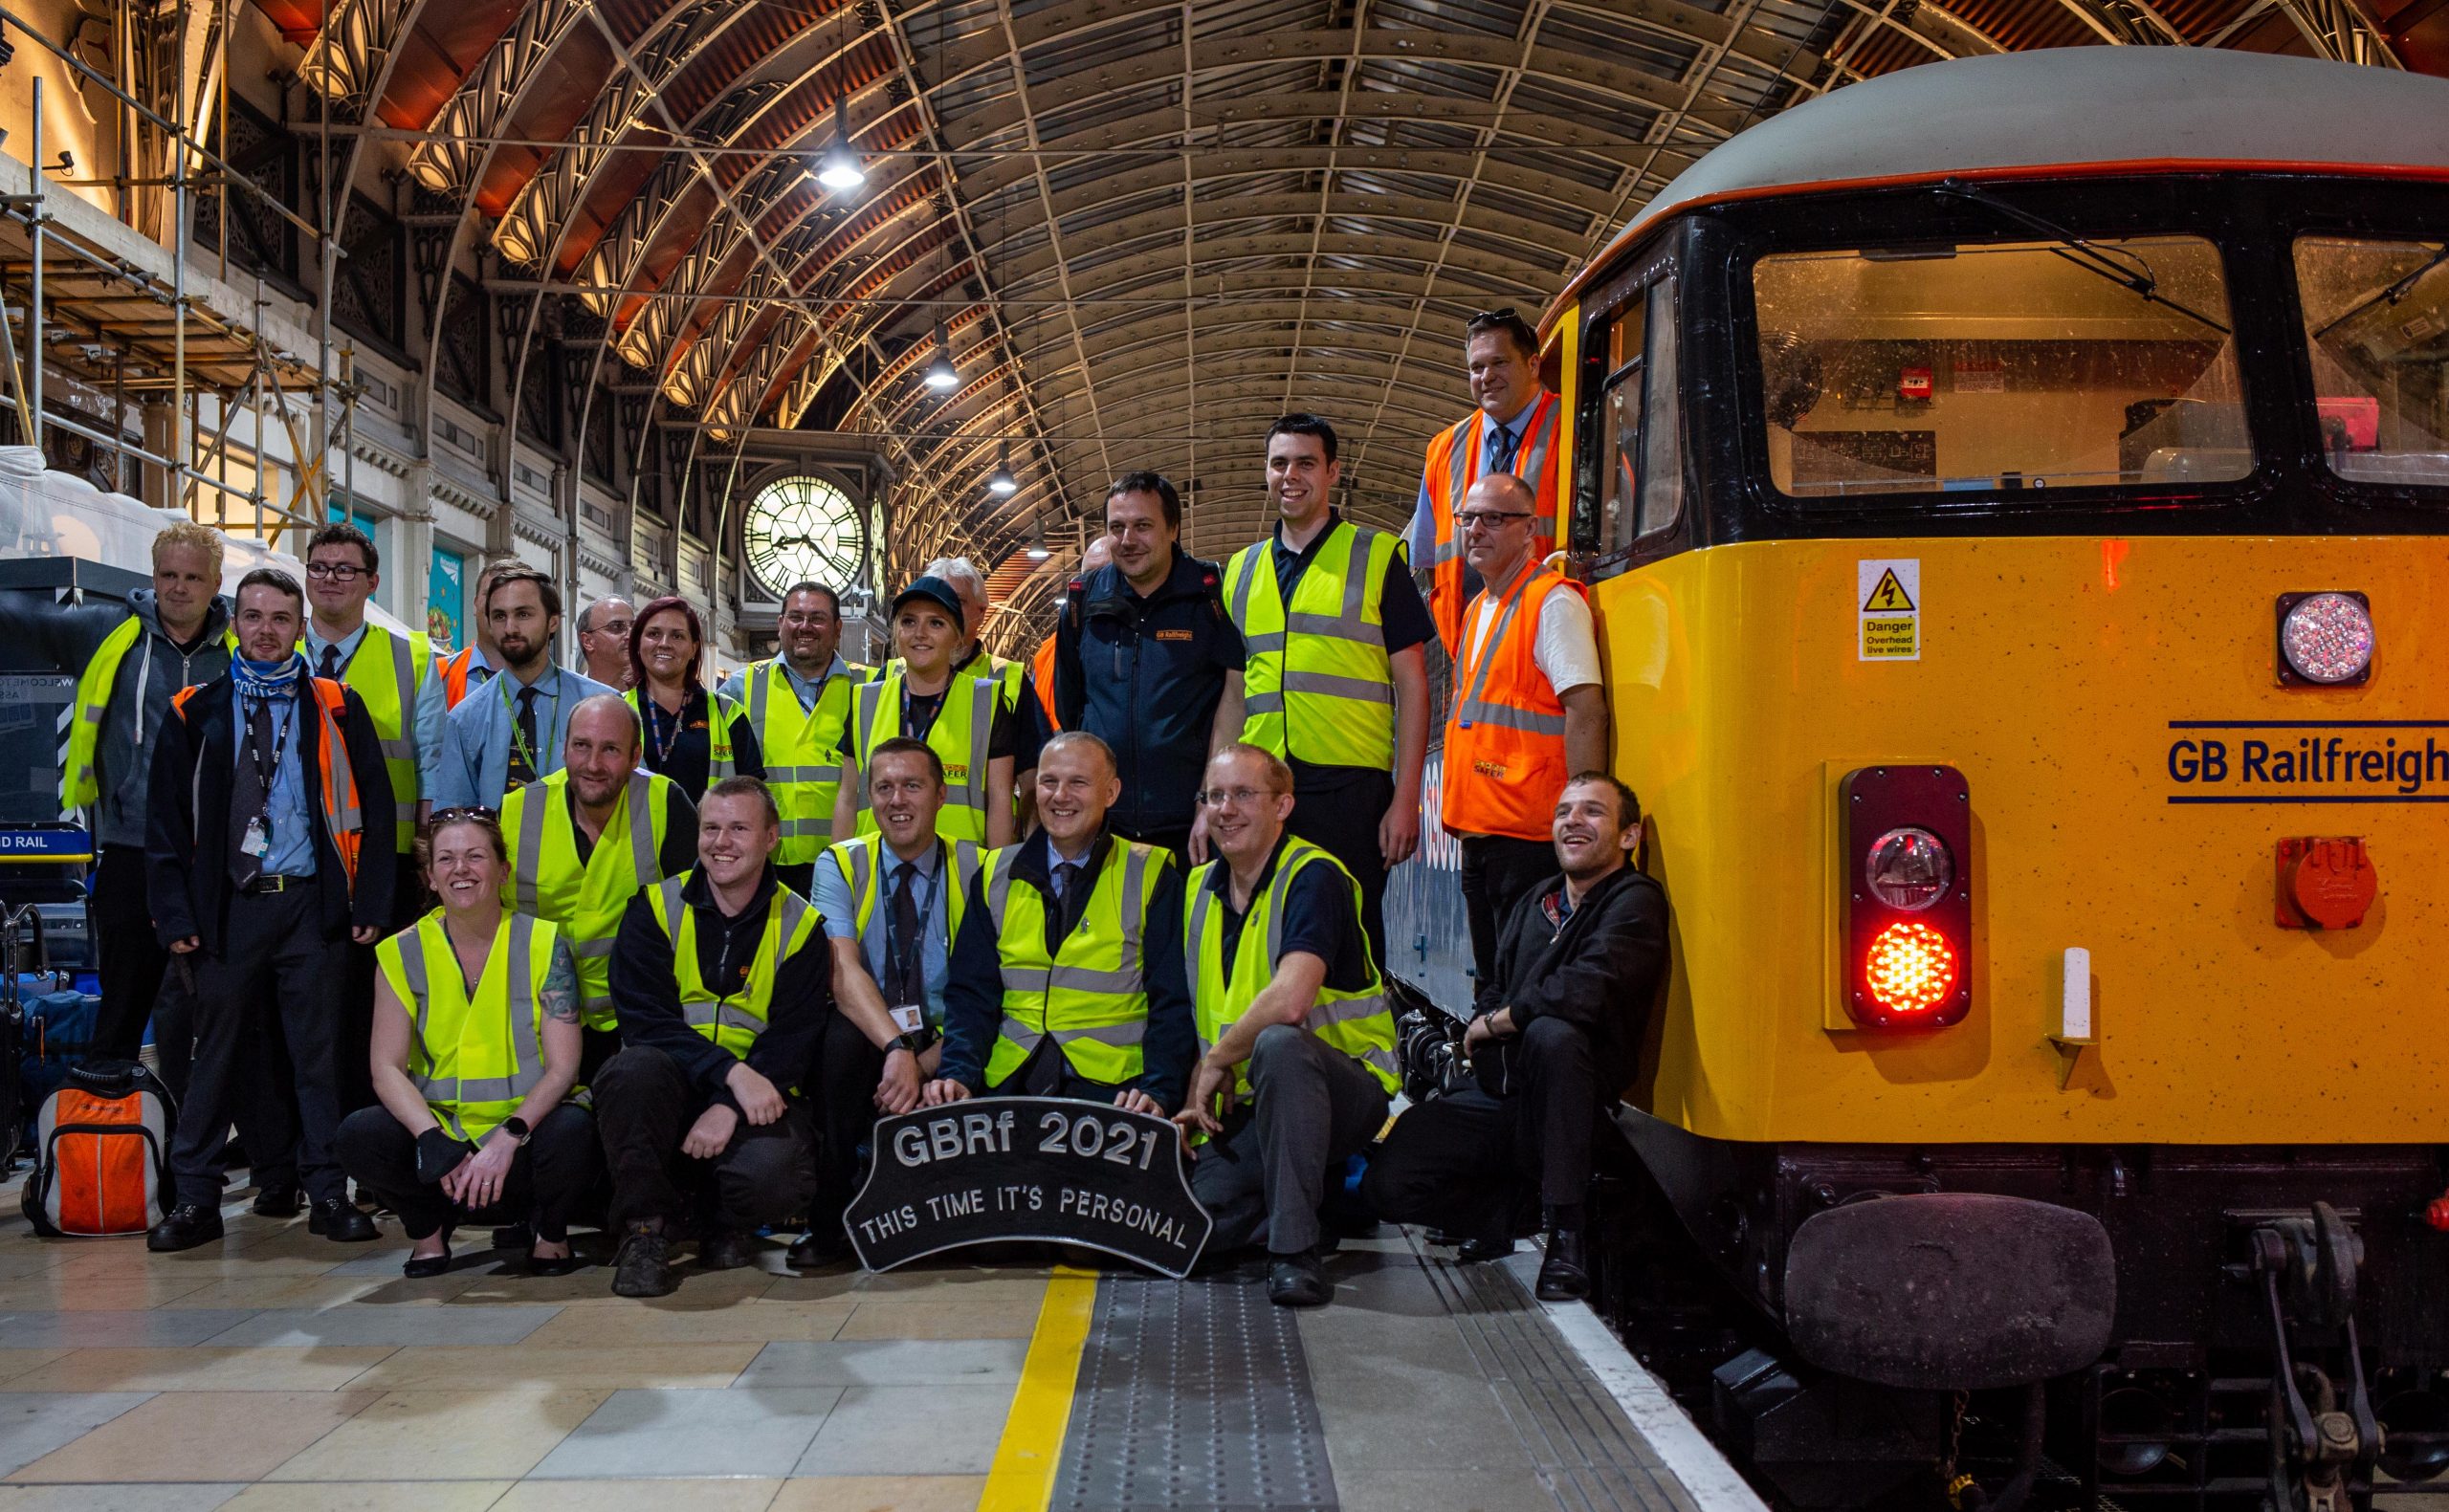 GB Railfreight charity railtour raises over £147,000 for Prostate Cancer UK